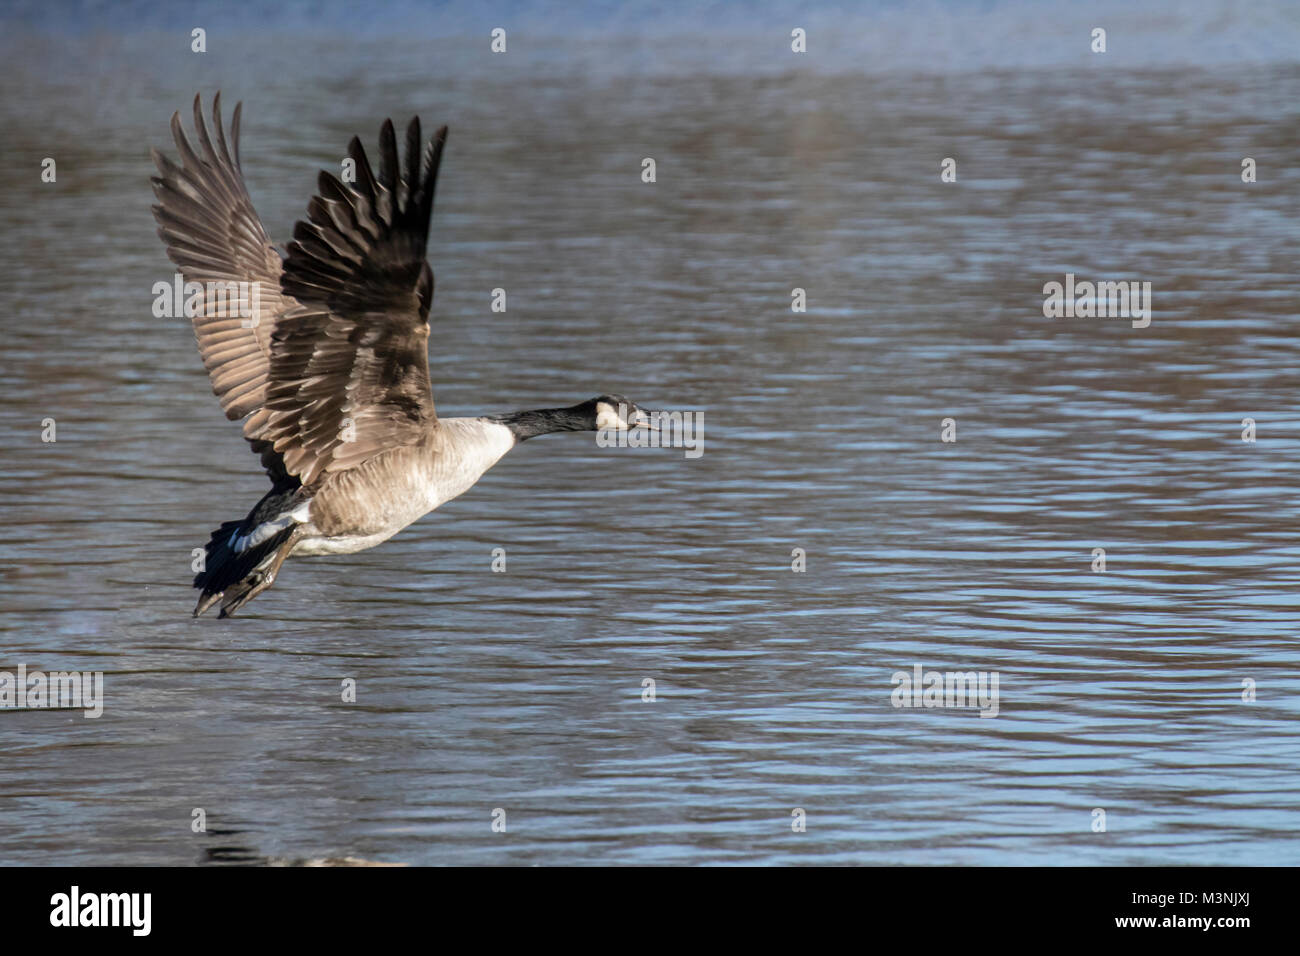 Flying branta geese Stock Photo